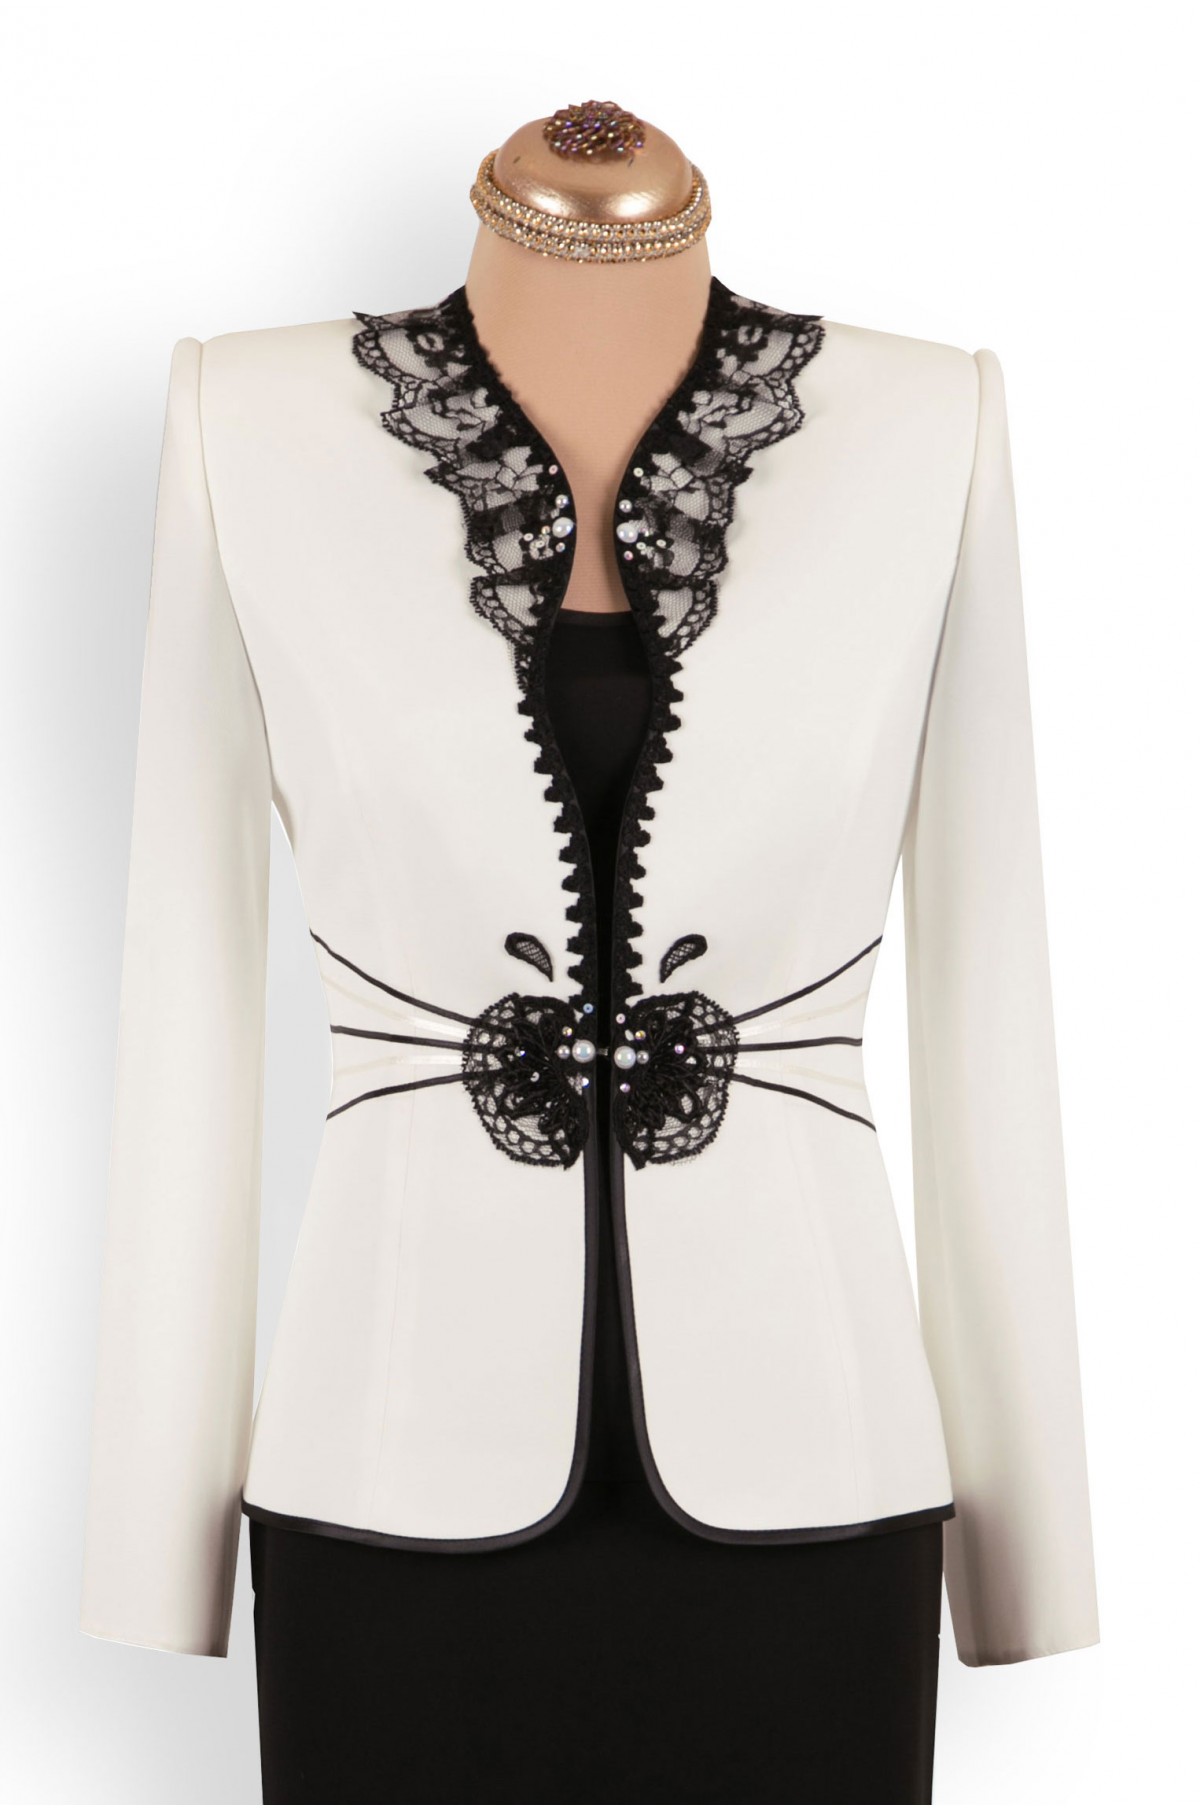 Costum alb negru/Compleuri ocazie elegante ieftine marimi mari